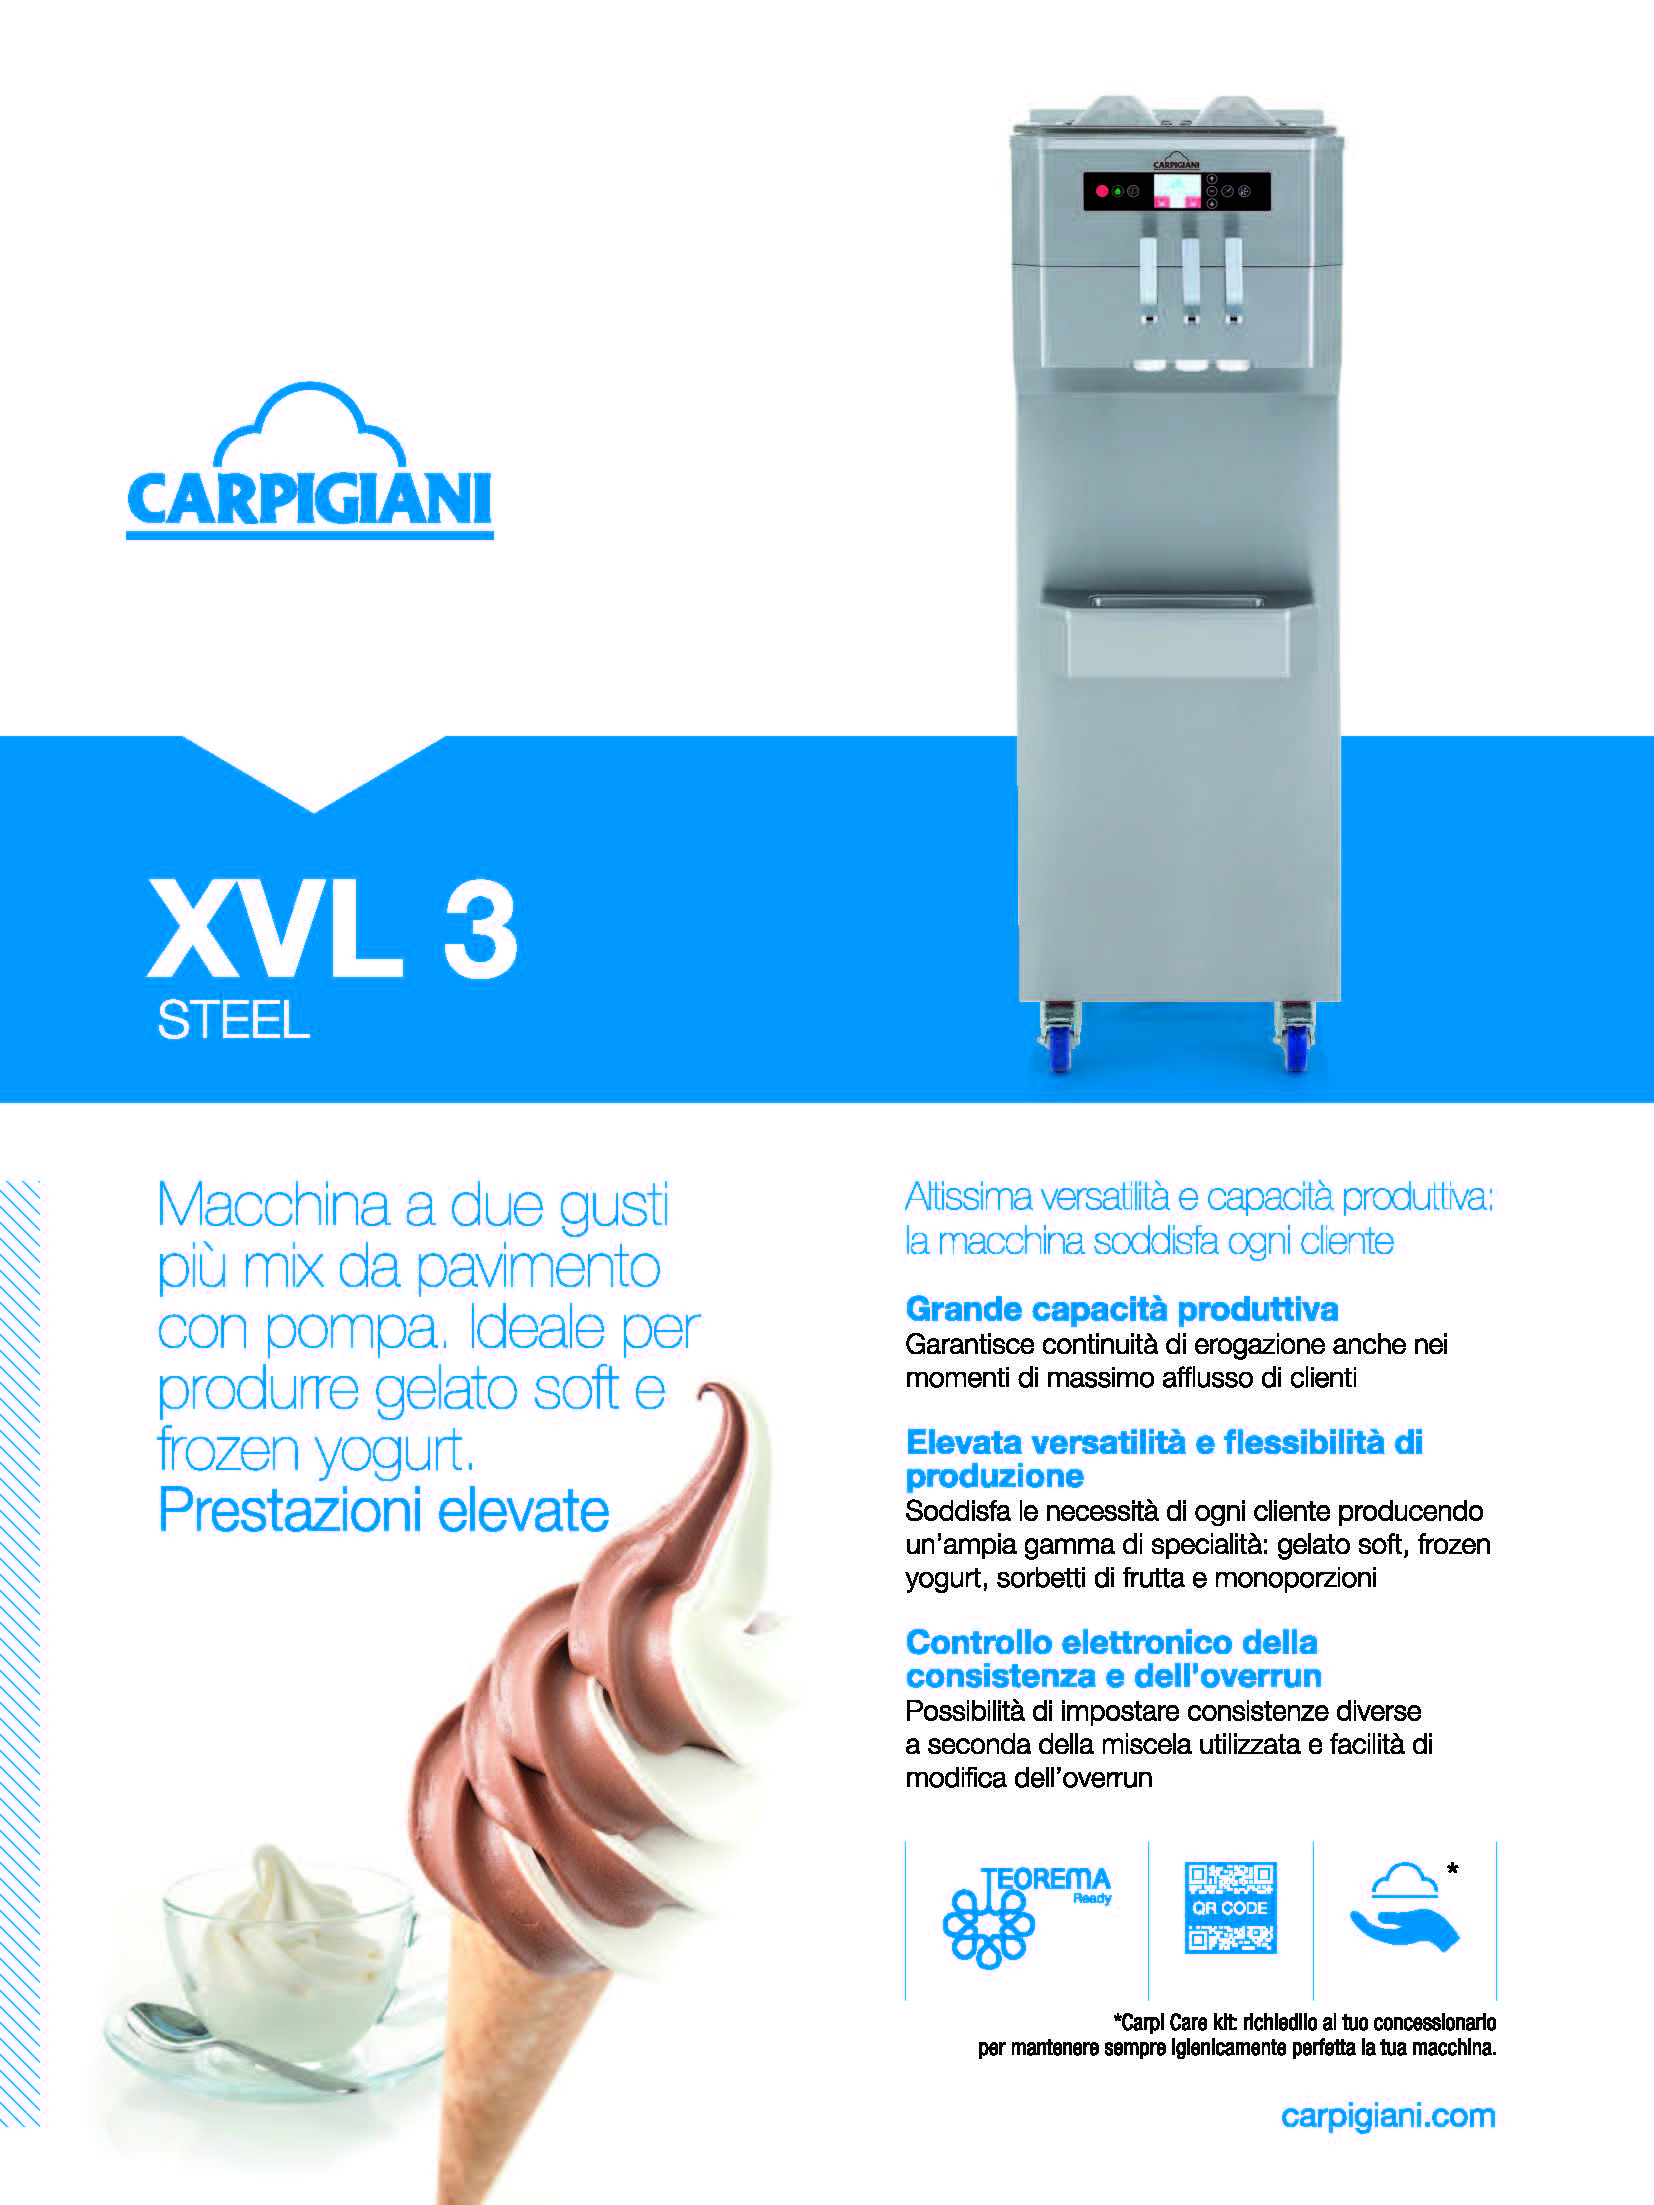 Carpigiani – XVL 3 STEEL